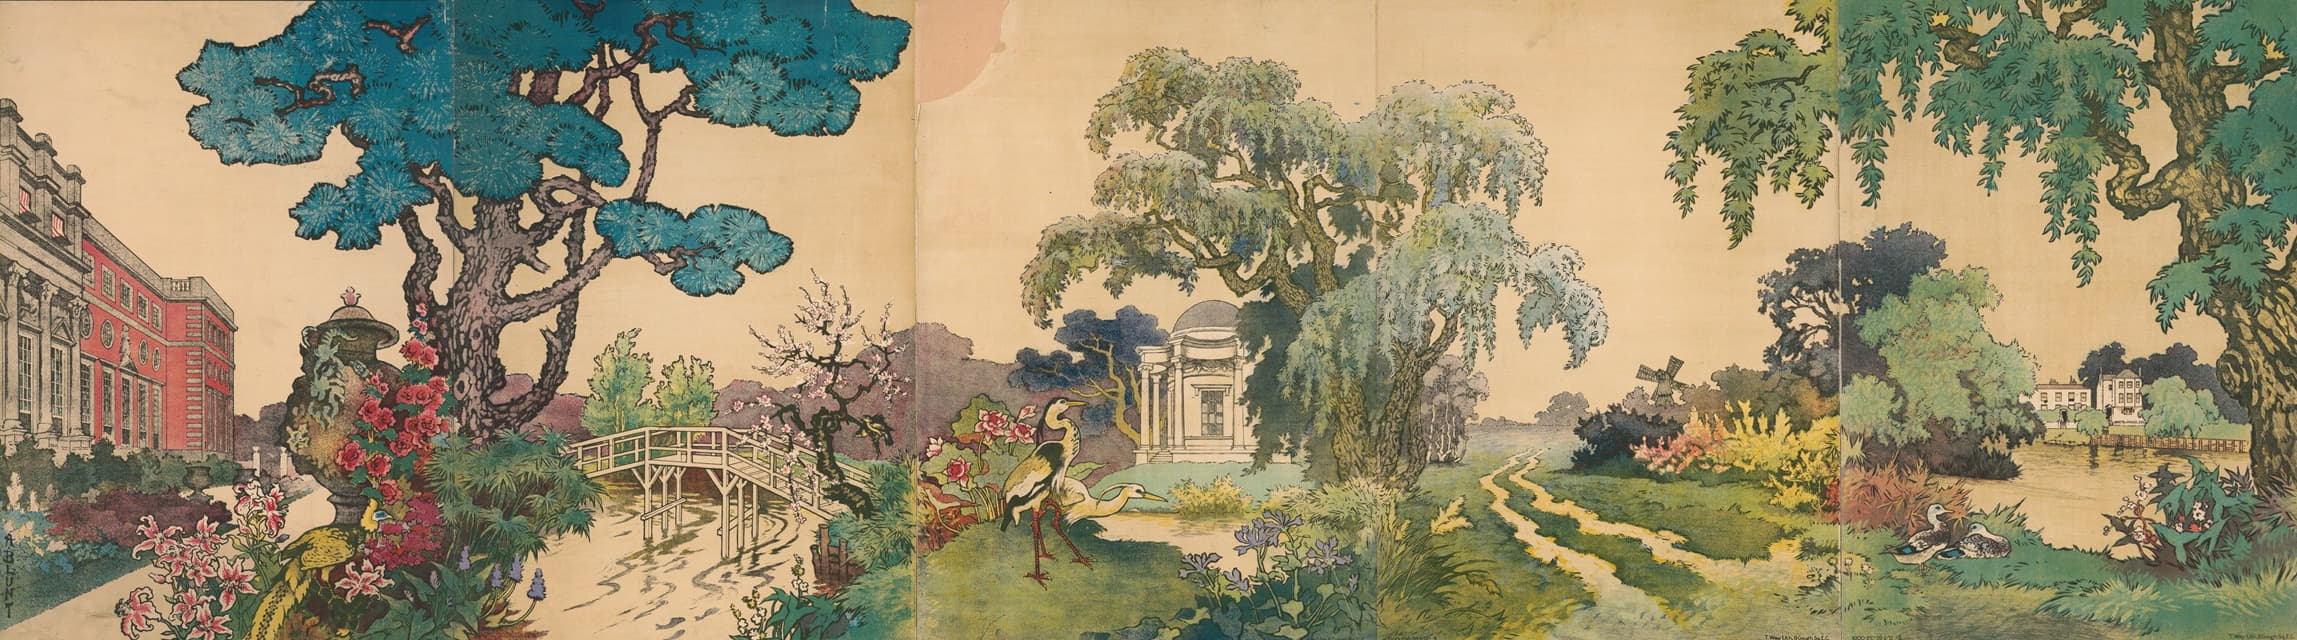 A. Blunt - Estate, gardens, birds, and pond